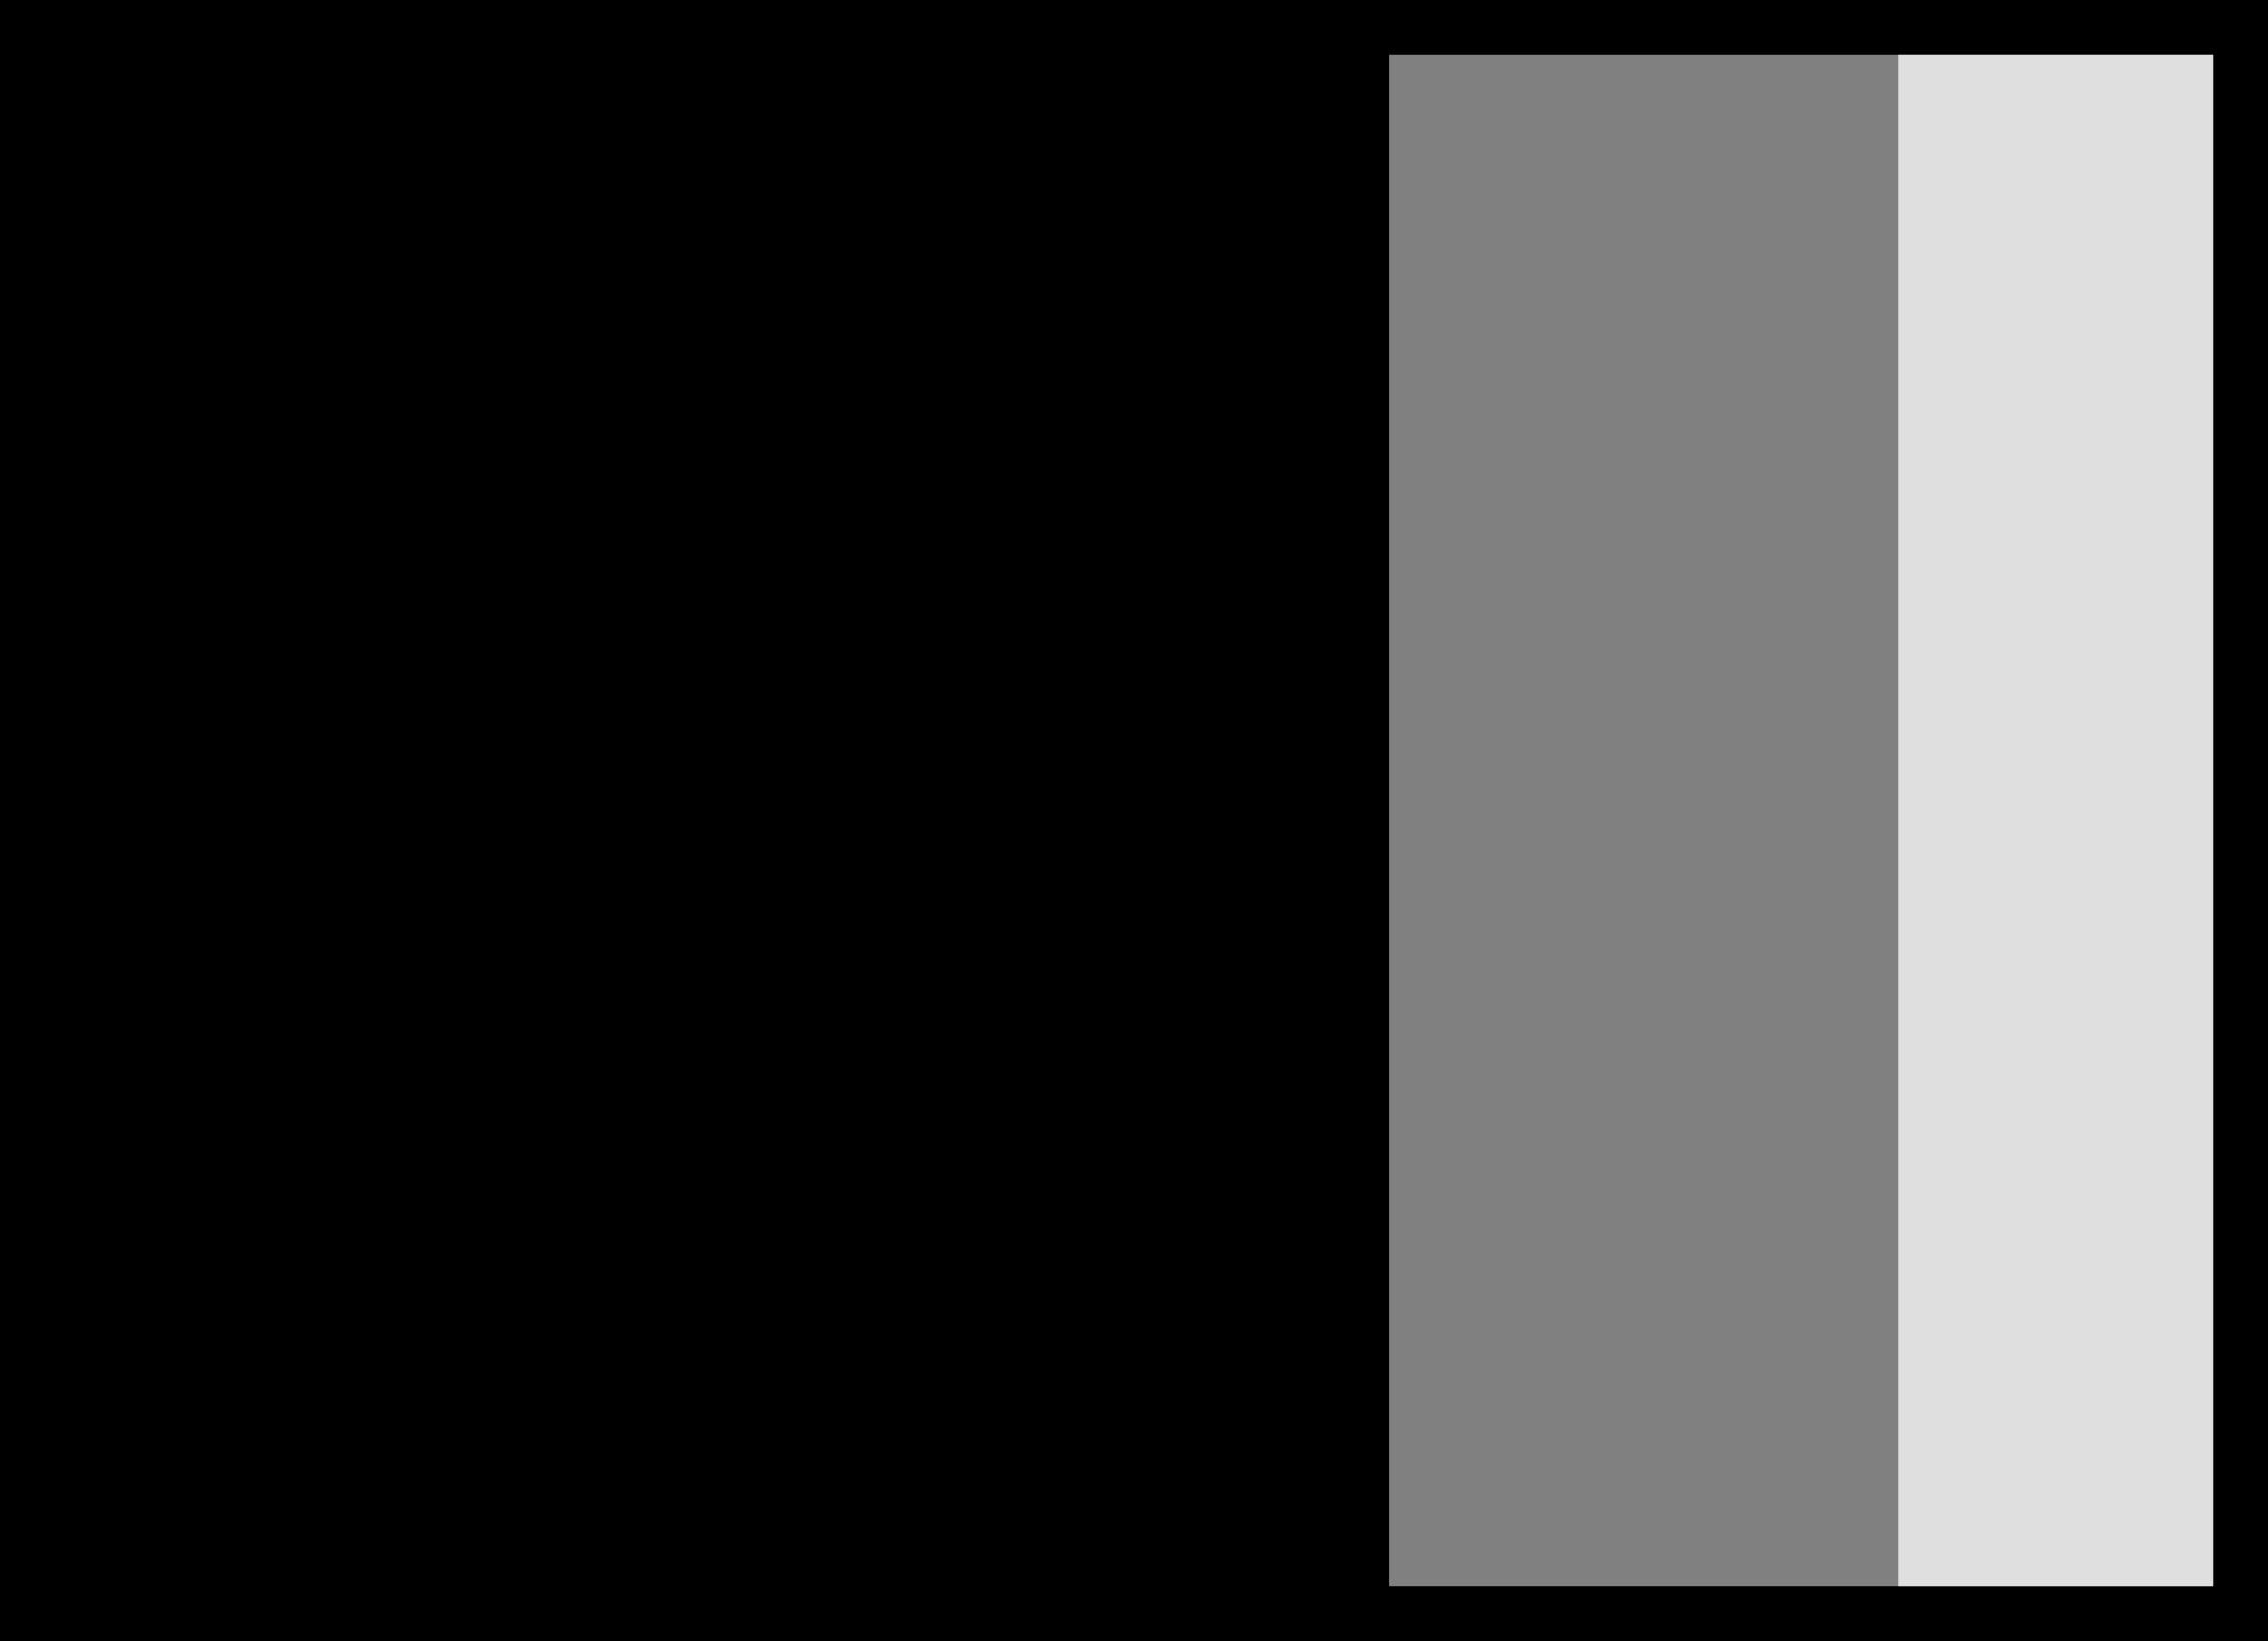 large dark quadrangle beside a thinner mid-colored quad beside a thinner light quad